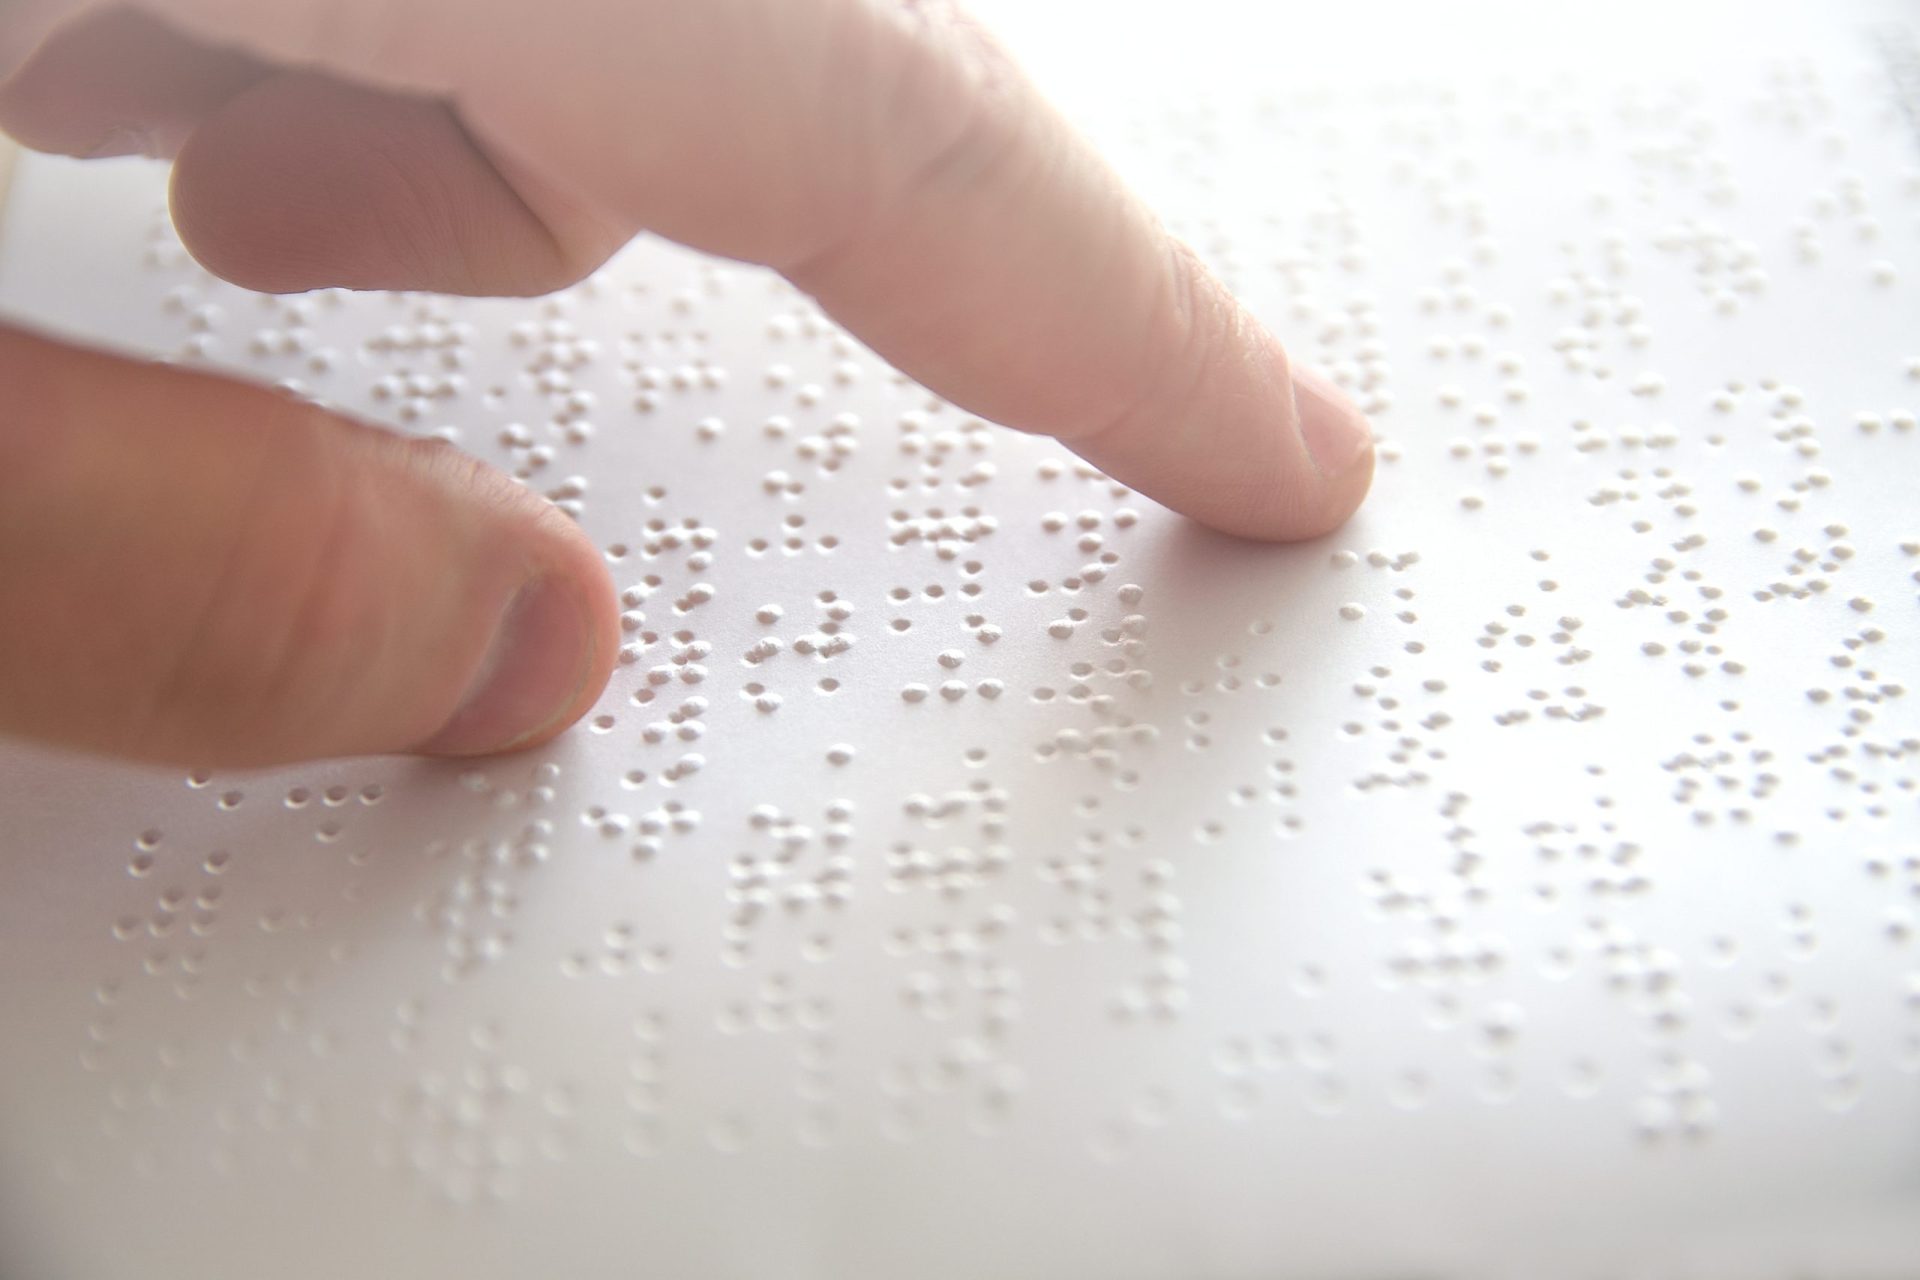 Voto em braille estará disponível em breve